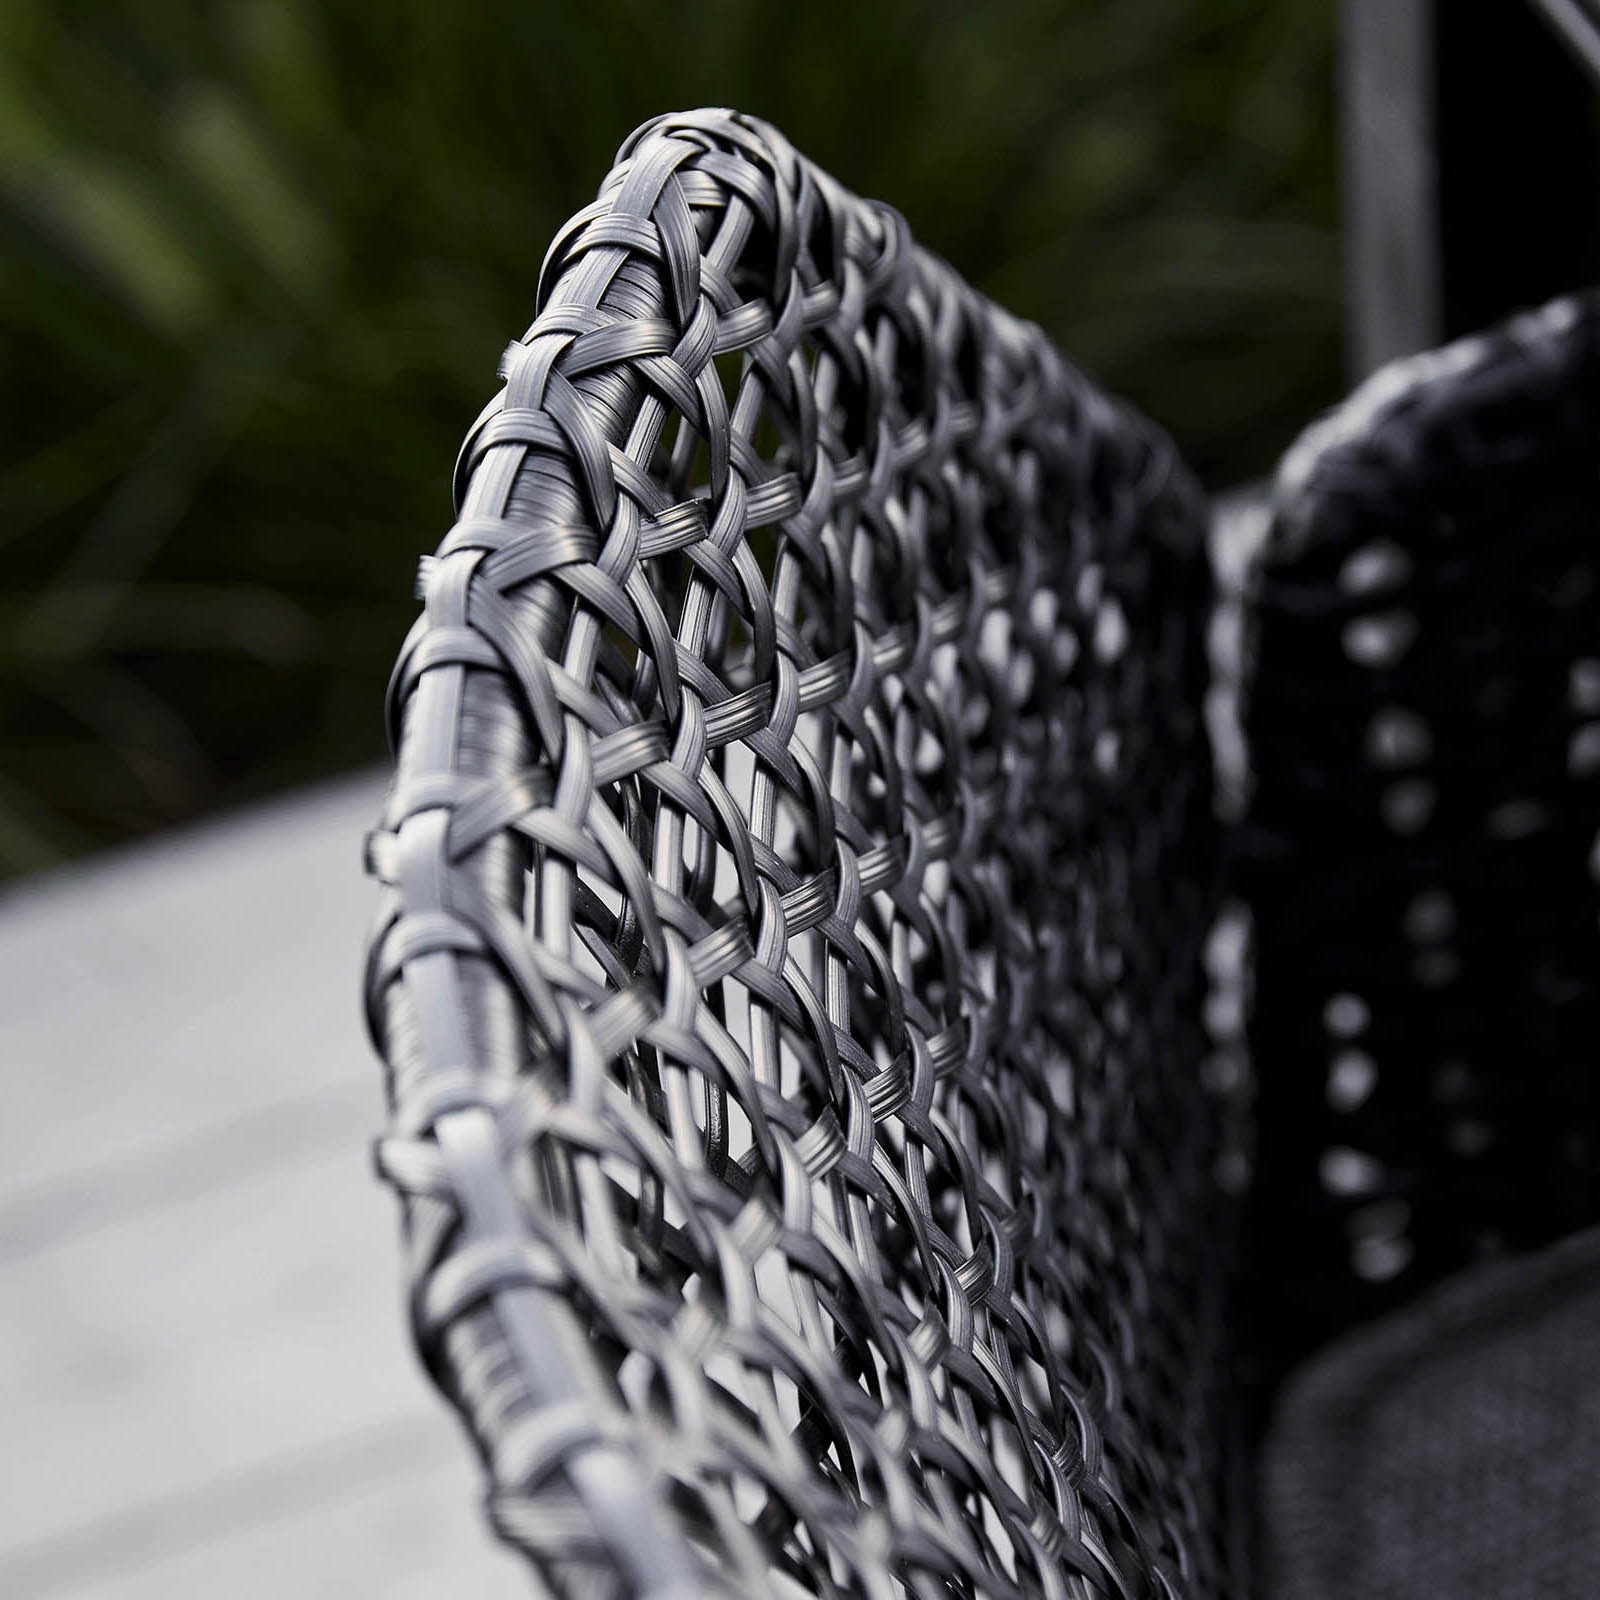 Vibe Stuhl aus Cane-line Weave in Light Grey/Grey/Taupe mit Kissen aus Cane-line Natté in Black